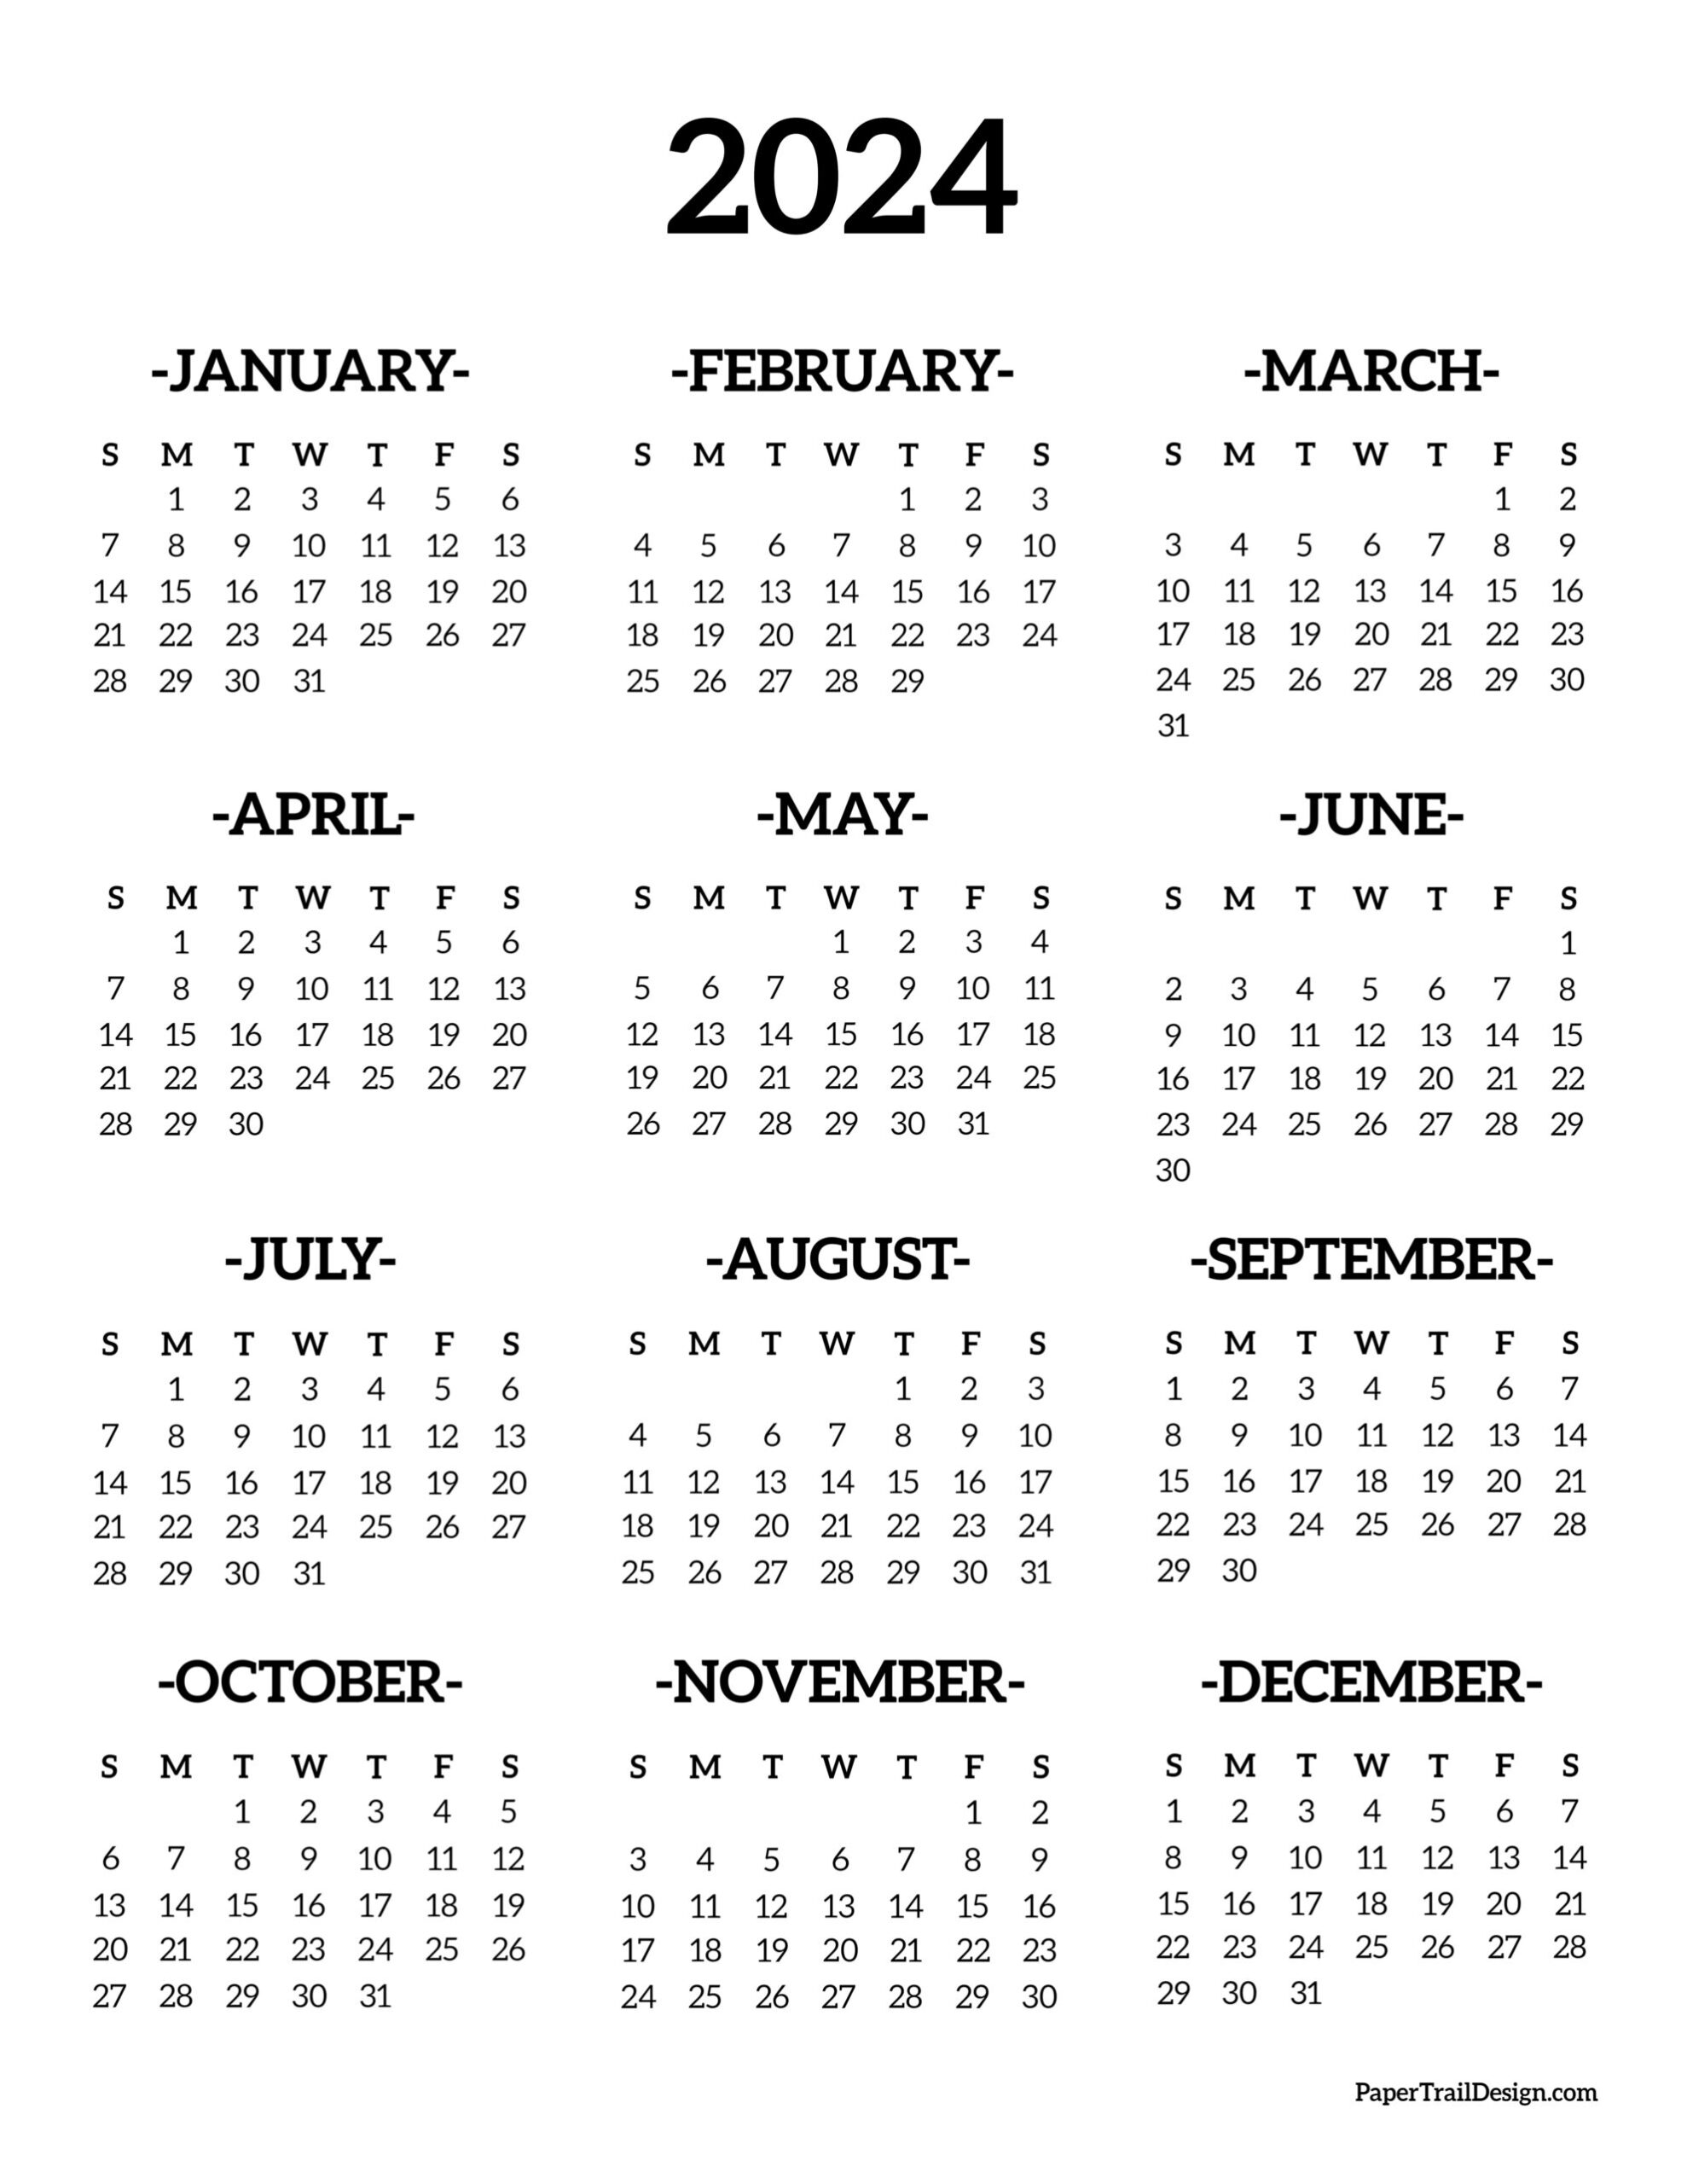 Calendar 2024 Printable One Page - Paper Trail Design for Printable 2024 Calendar Free